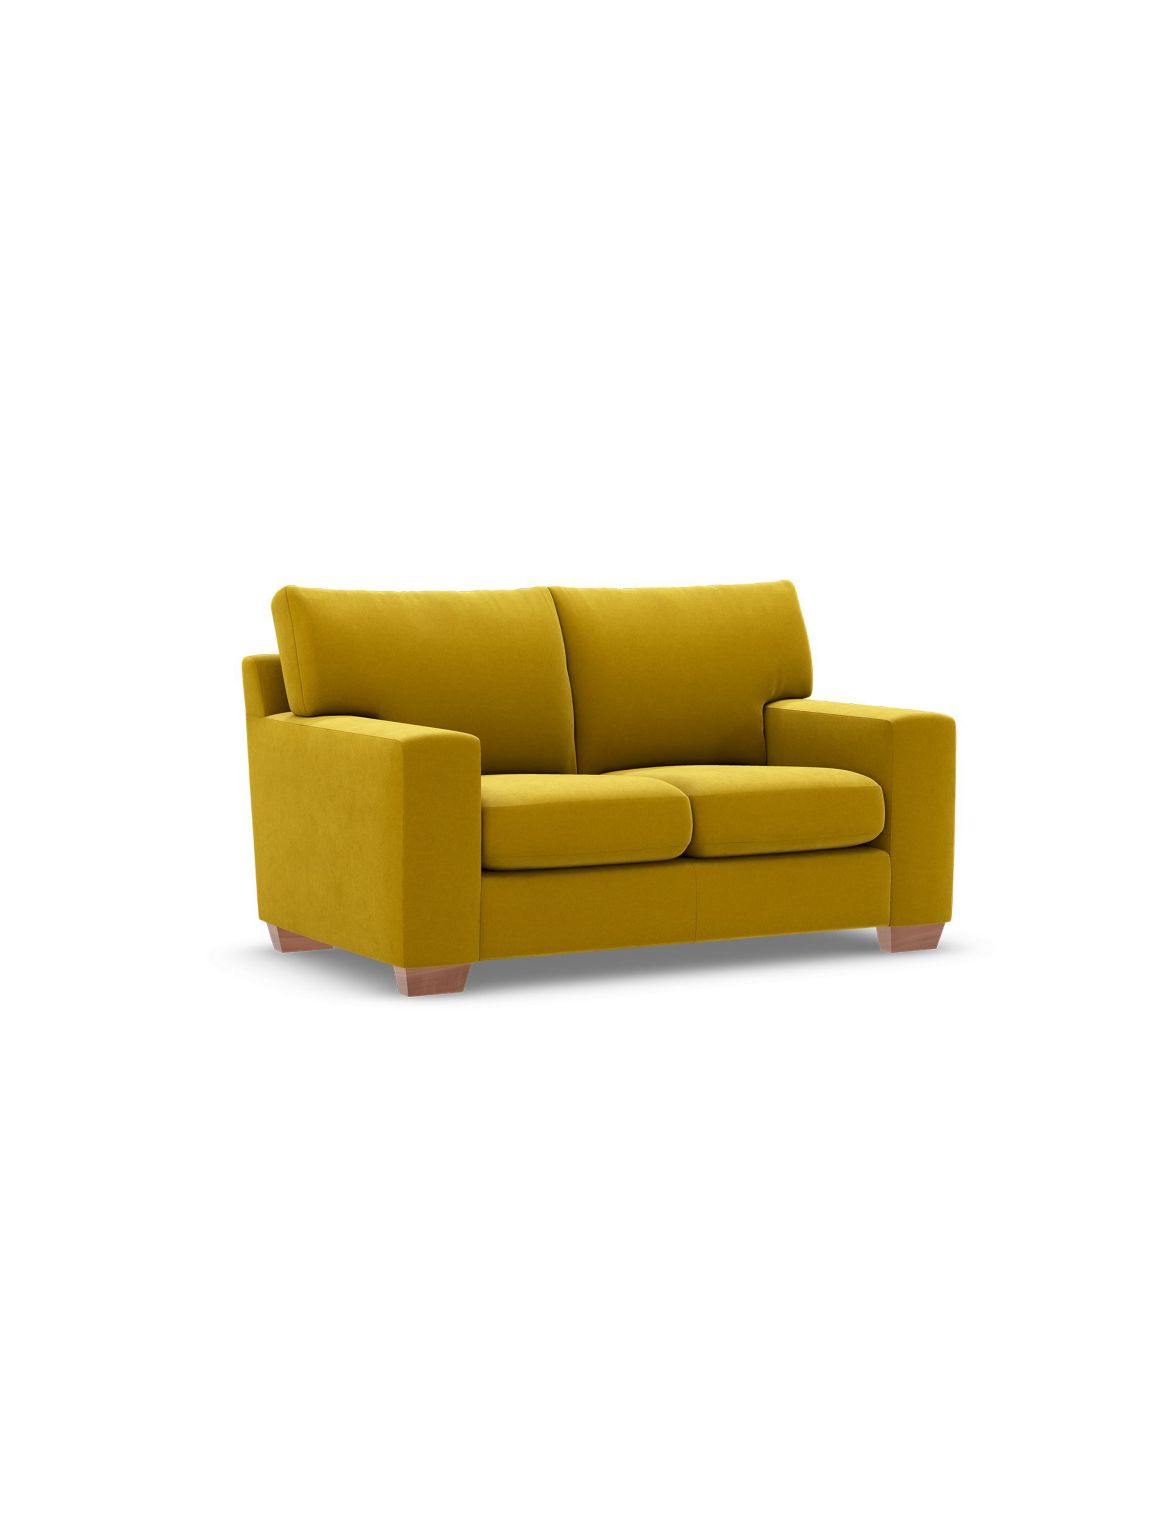 Alfie Compact Sofa yellow